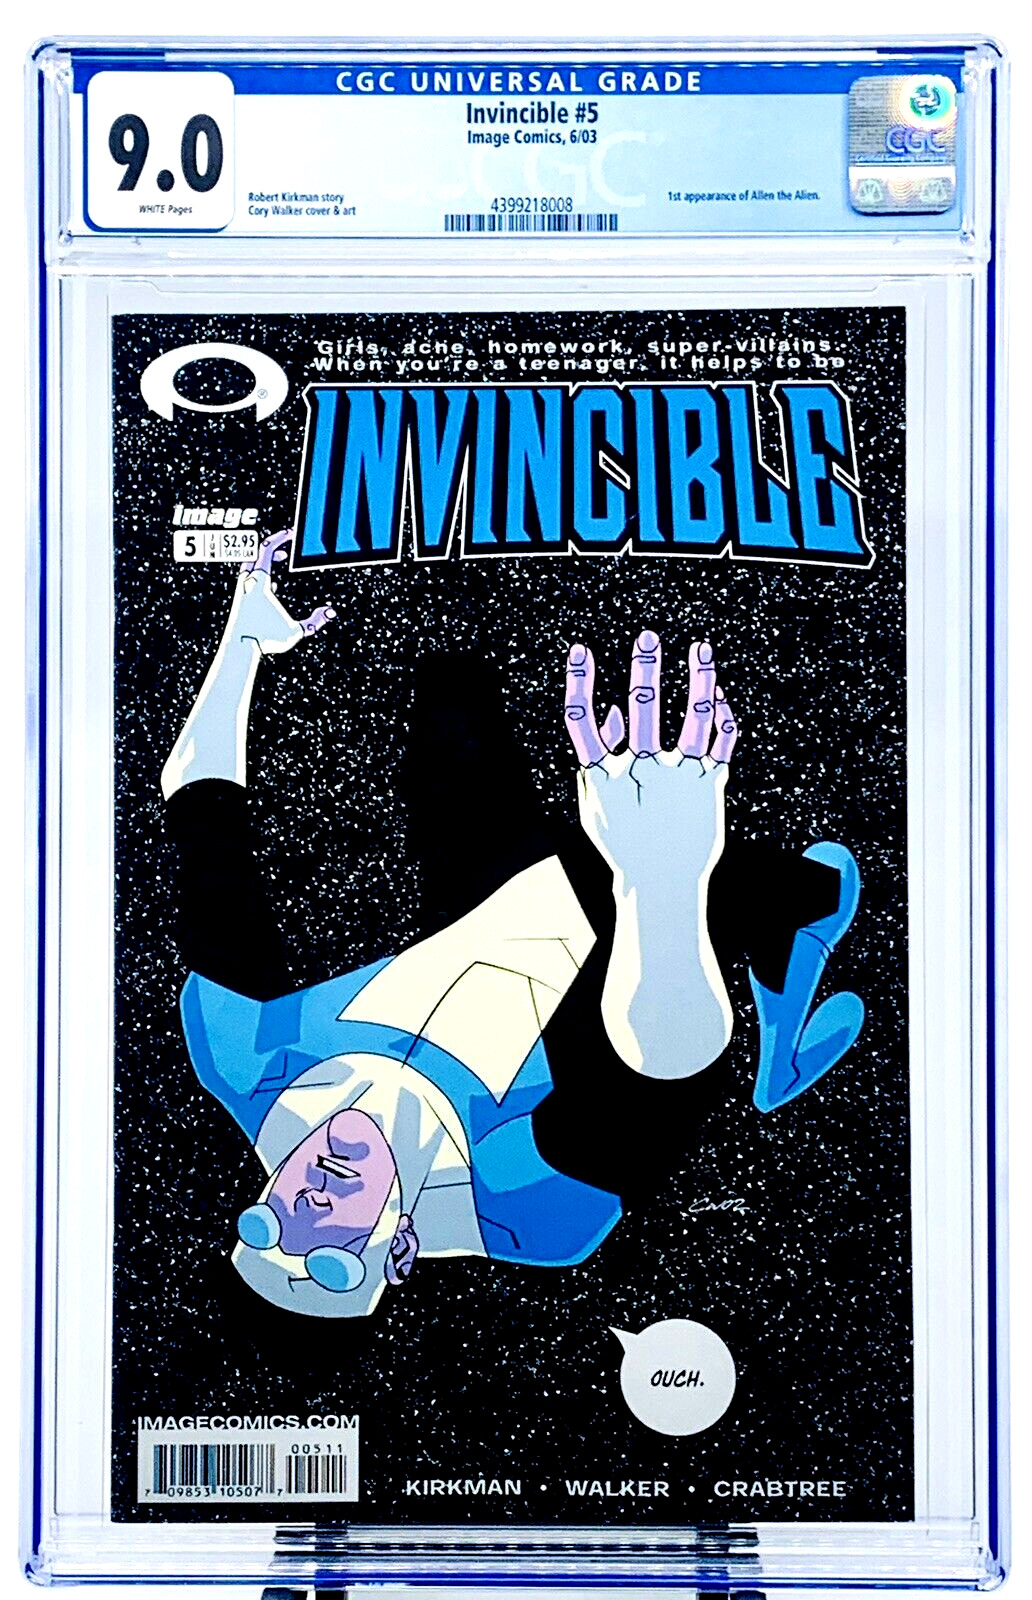 Invincible #5 Image Comics 2003 CGC 9.0 Allen the Alien Just Graded Clear Case